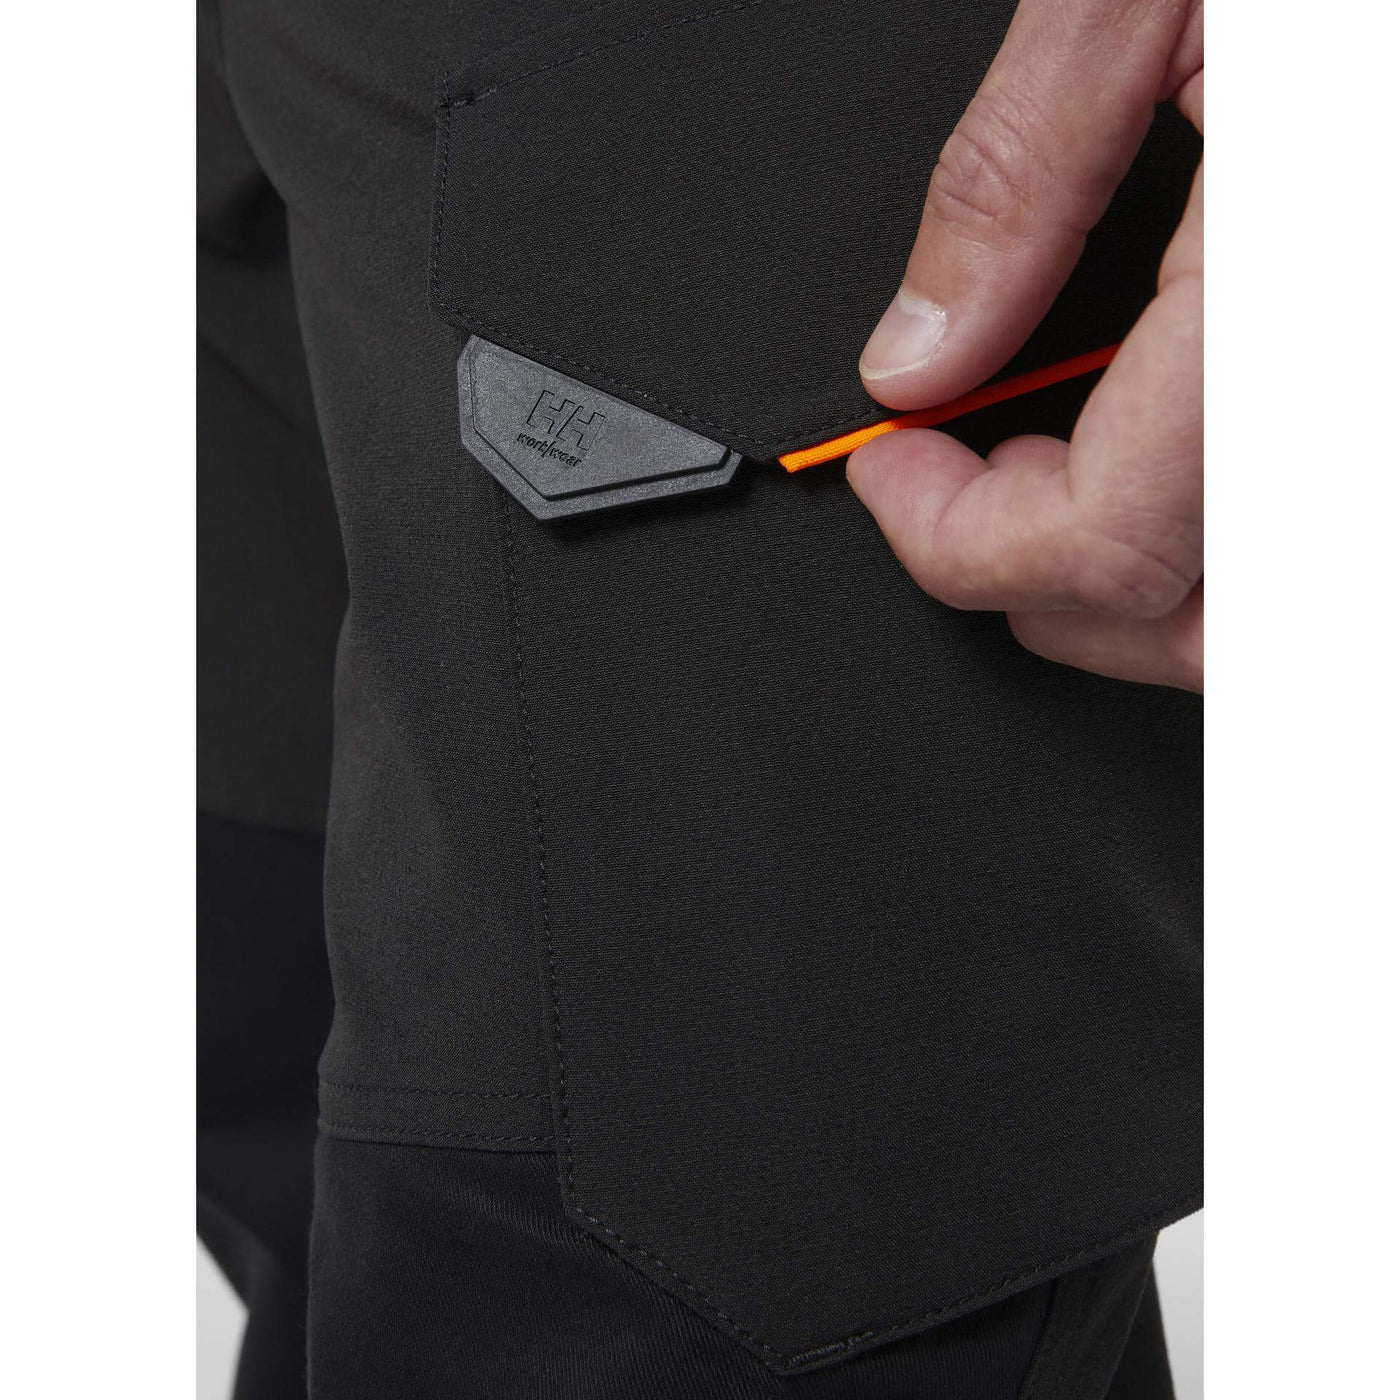 Helly Hansen Chelsea Evolution BRZ Service Work Trousers Black 7 Feature 2#colour_black